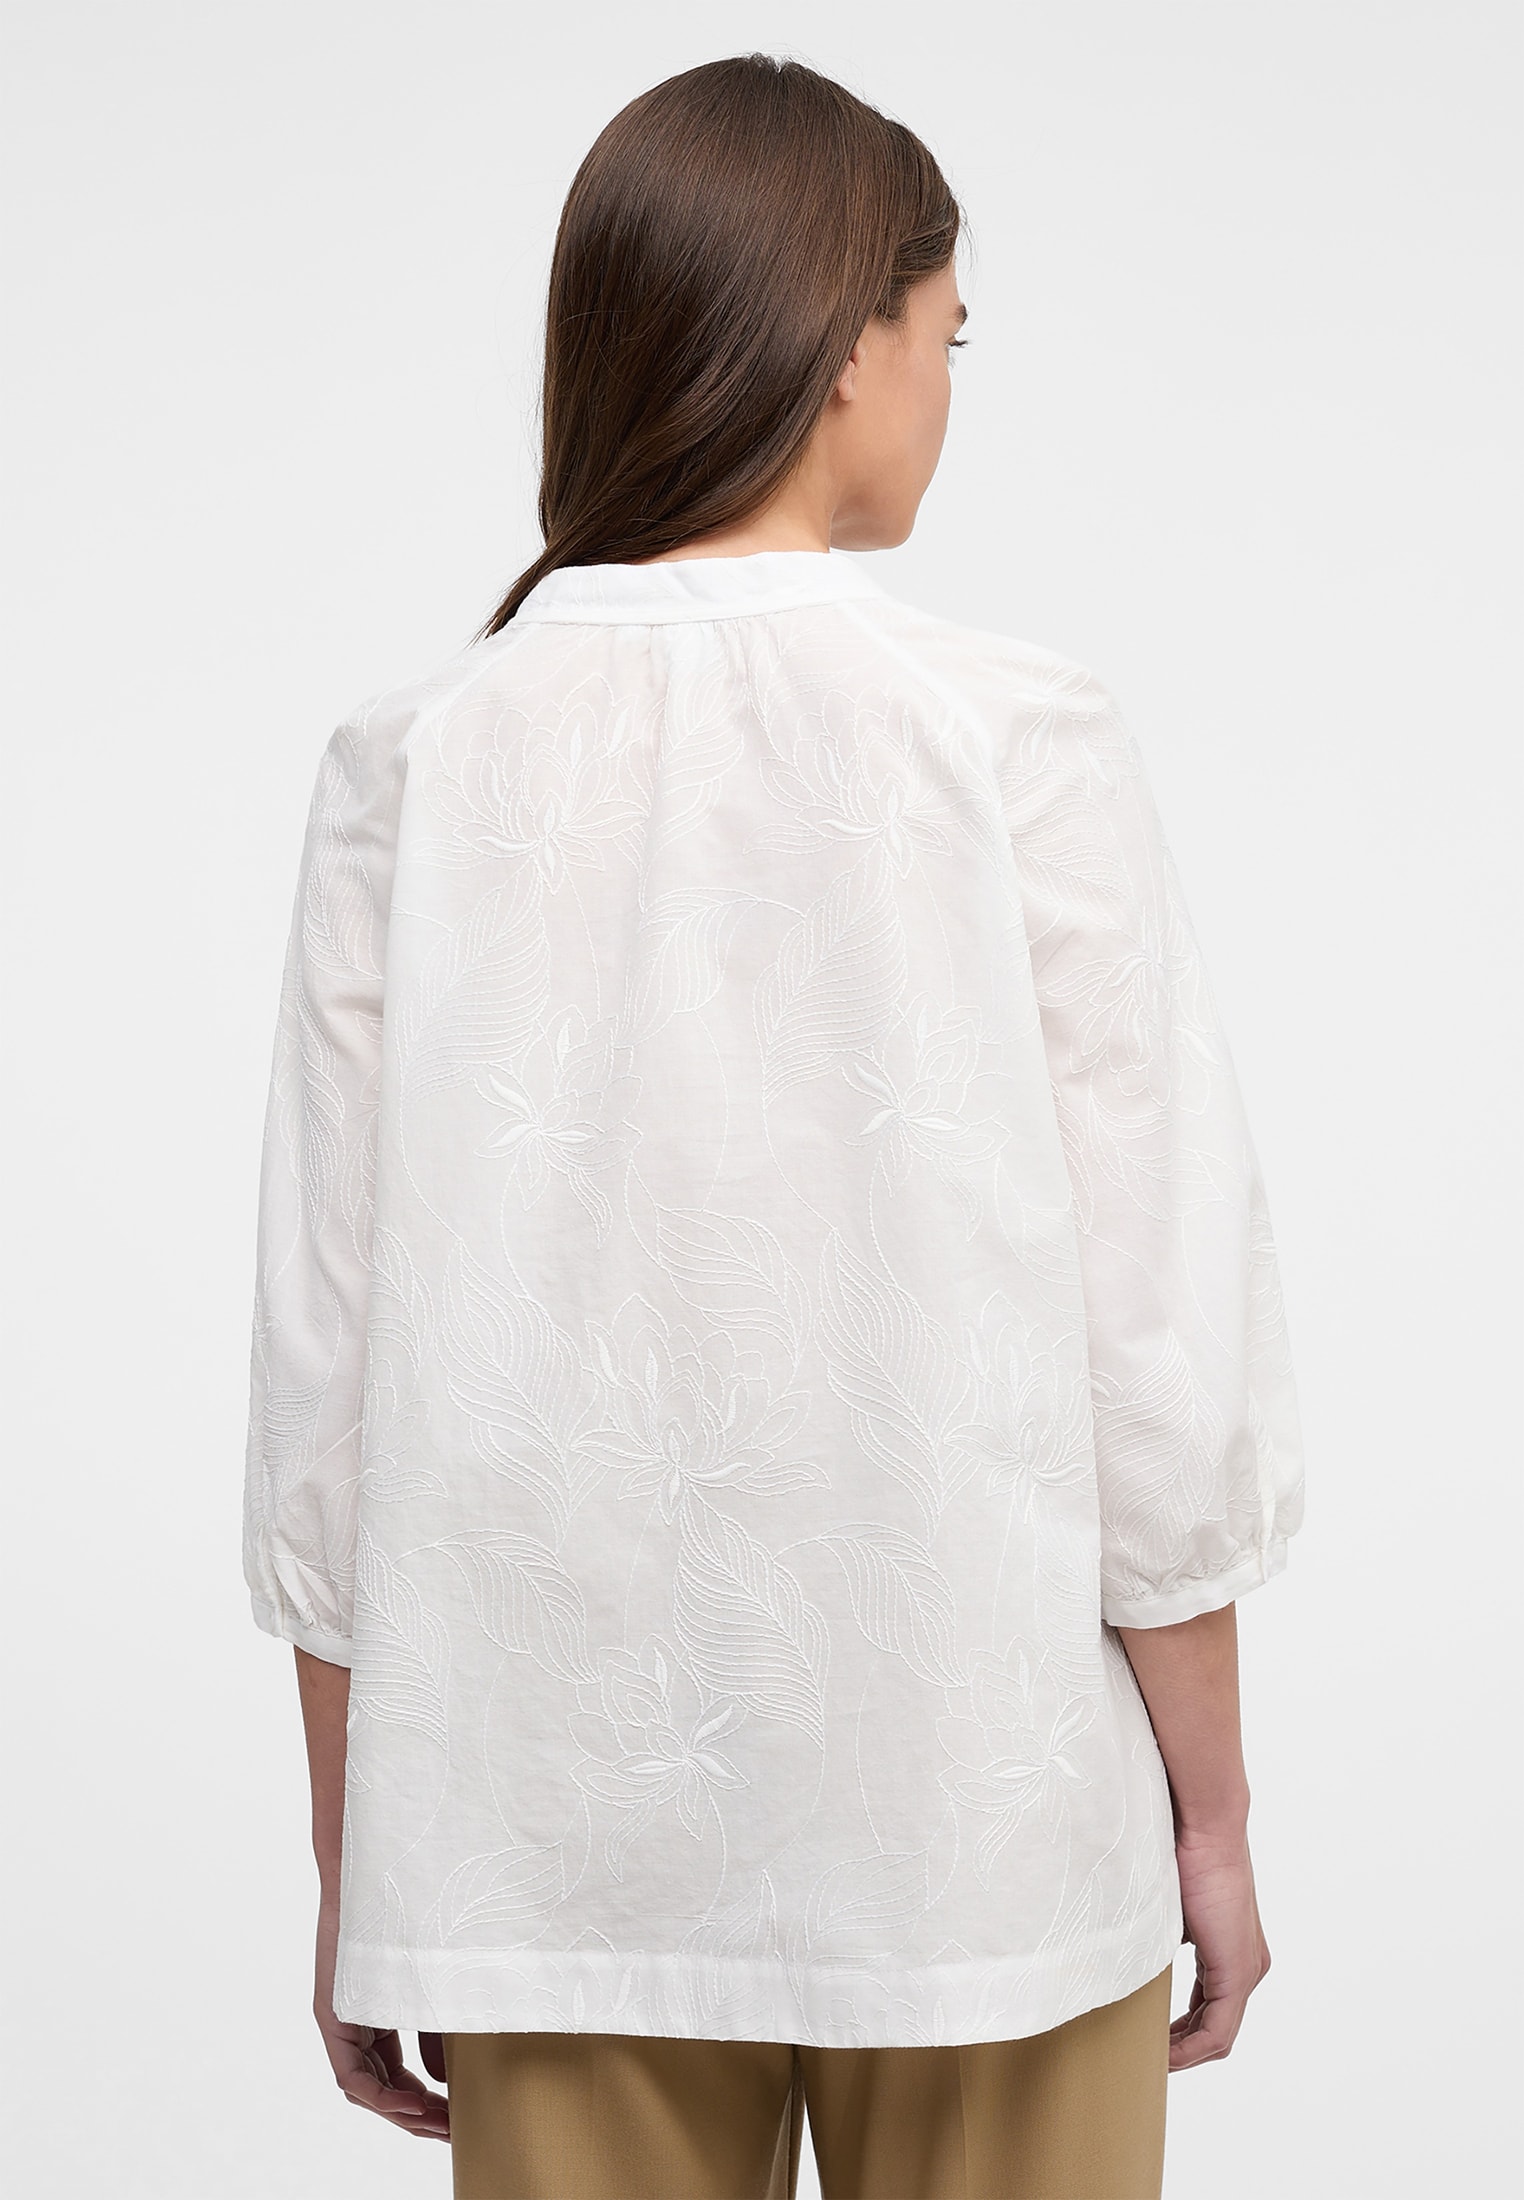 Blusenshirt in weiß unifarben | weiß | 36 | 3/4-Arm | 2BL04146-00-01-36-3/4 | V-Shirts